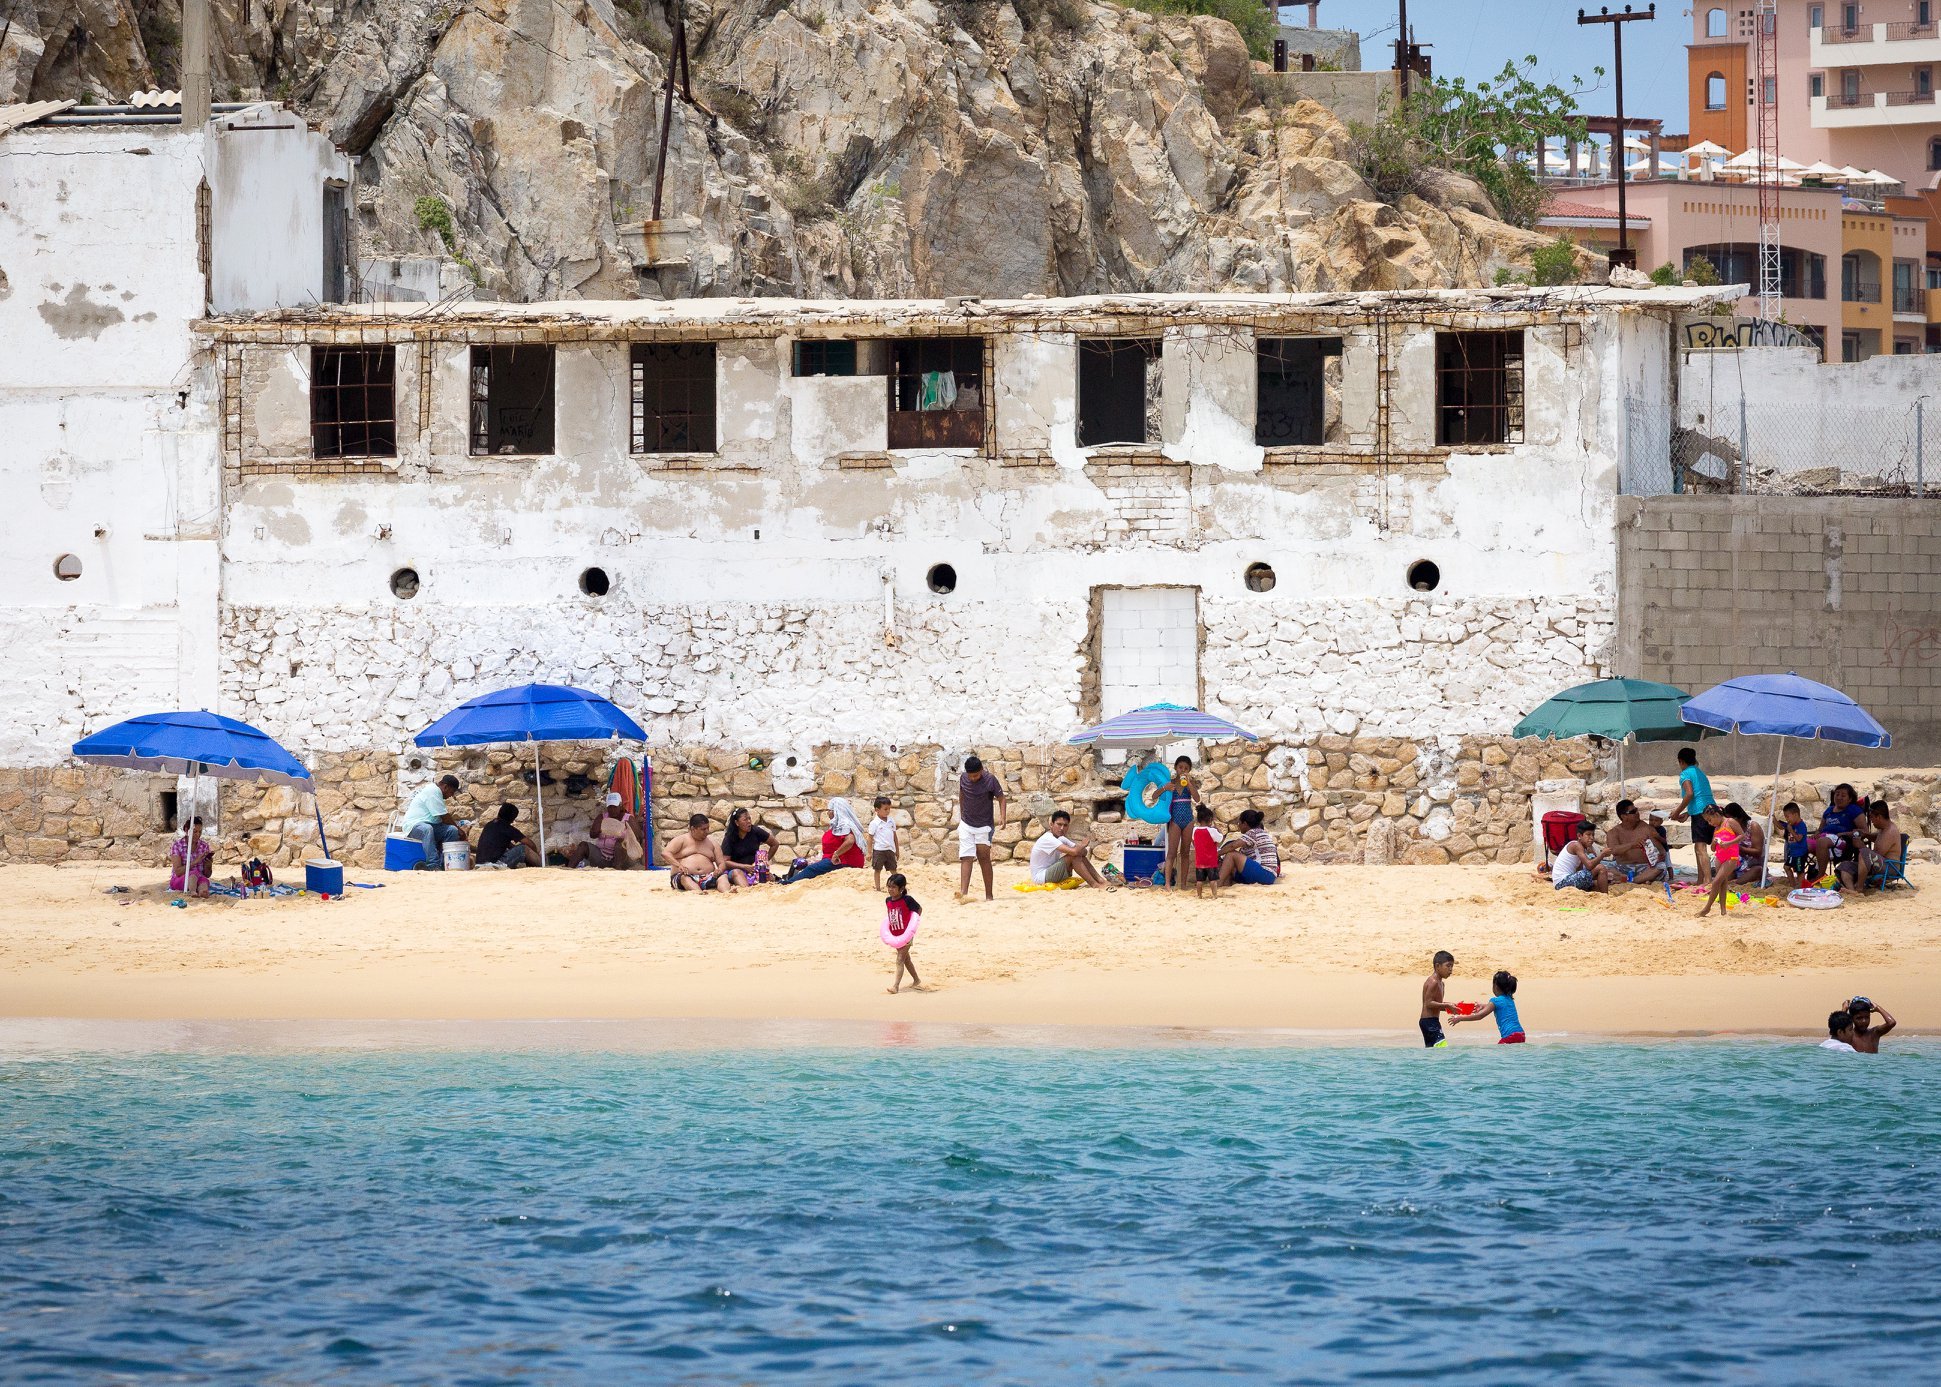 Locals beach, Cabo San Lucas